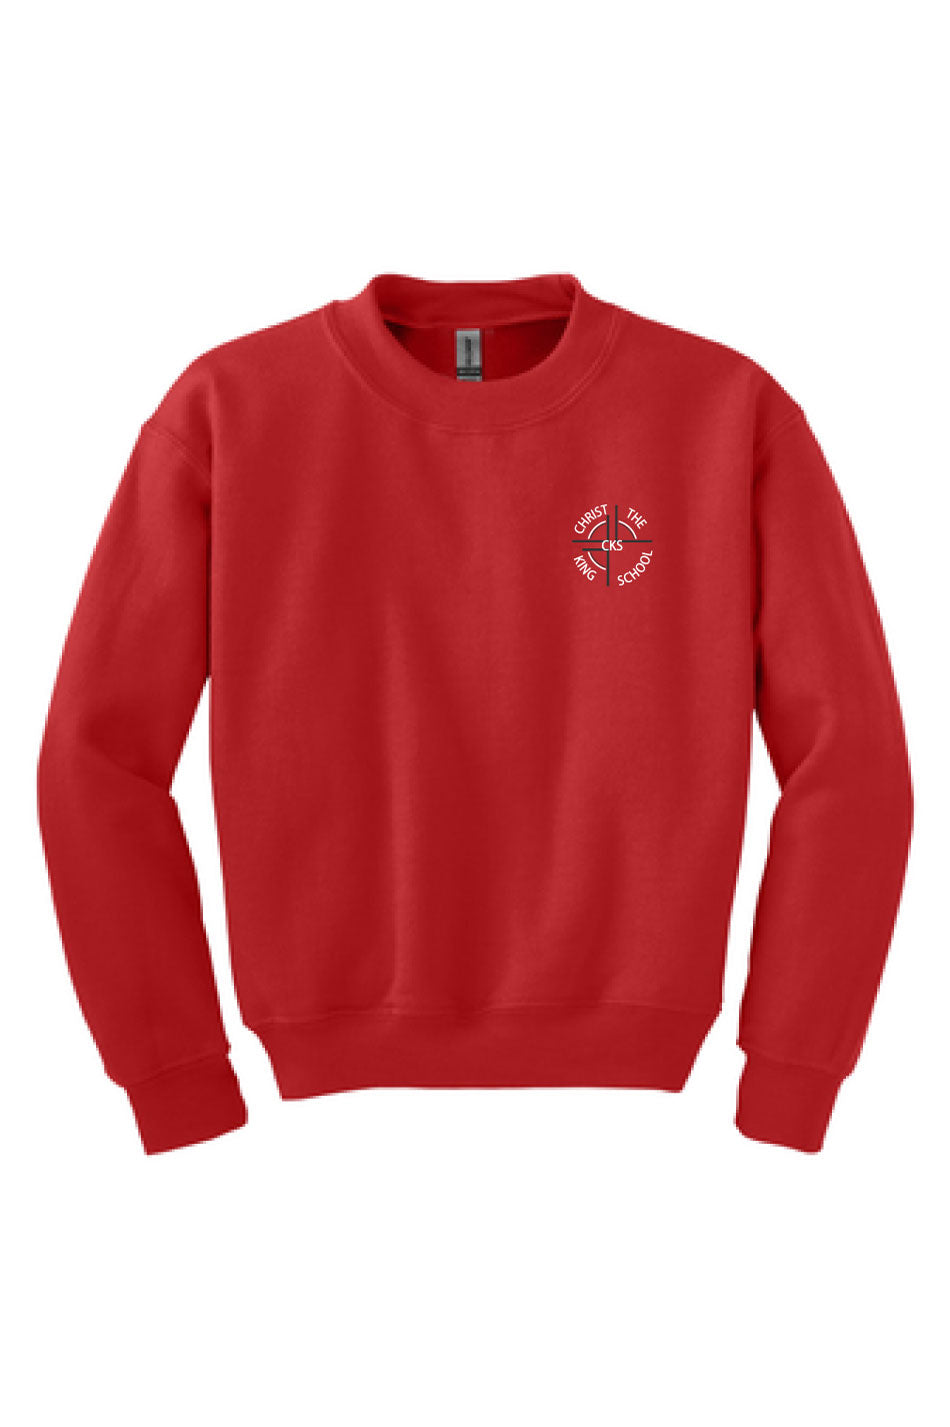 YOUTH CKS Crewneck Sweatshirt - Red